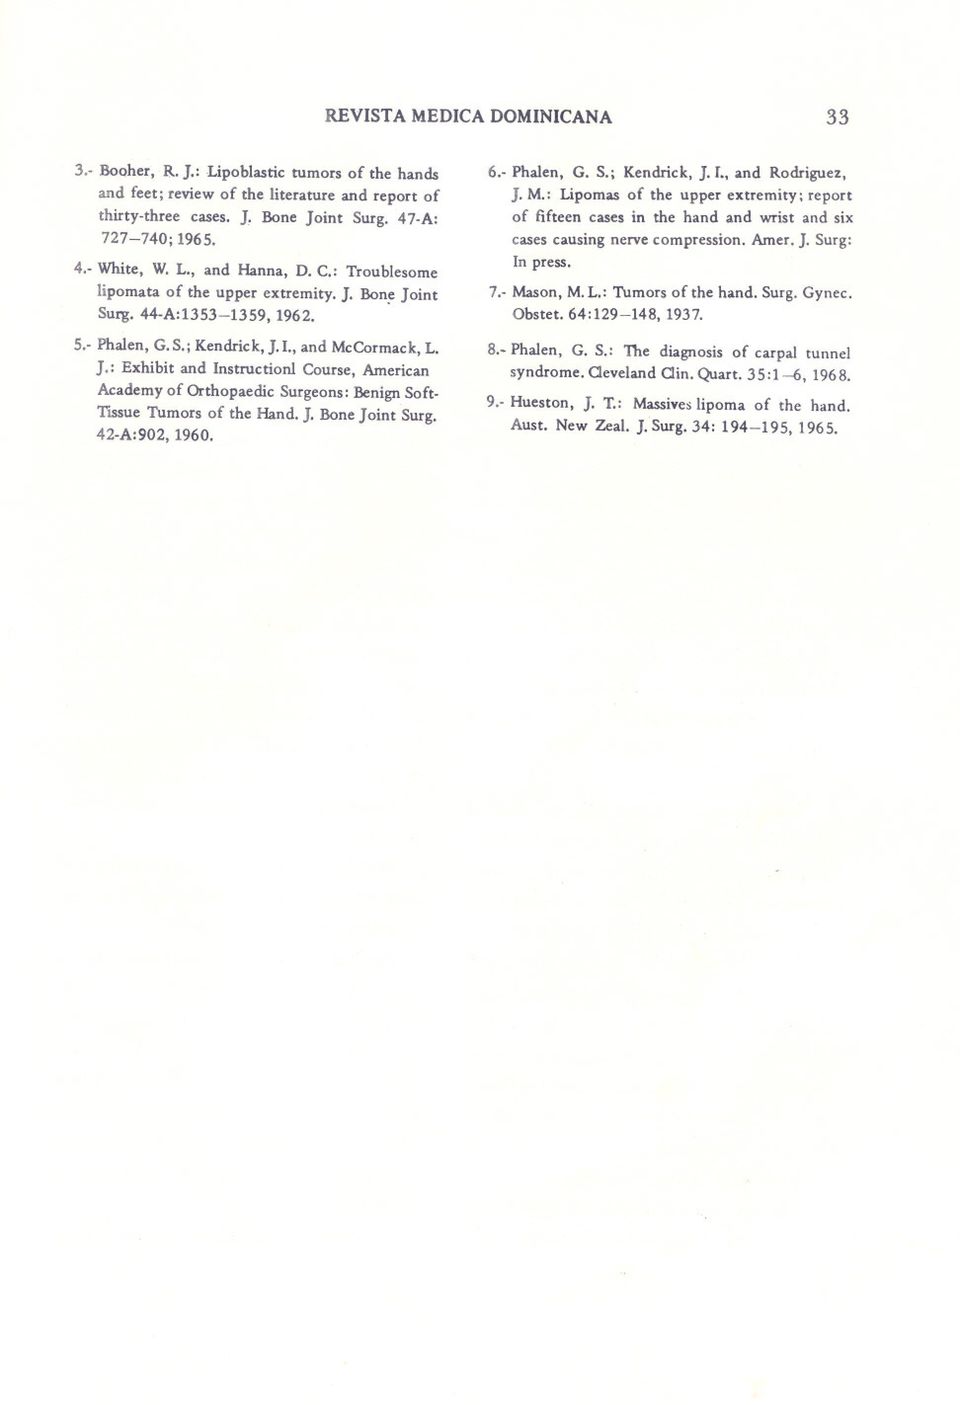 J. Bone Joint Surg. 42-A:902, 1960. 6.- Phalen, G. S.; Kendrick, J. l., and Rodriguez, J. M.